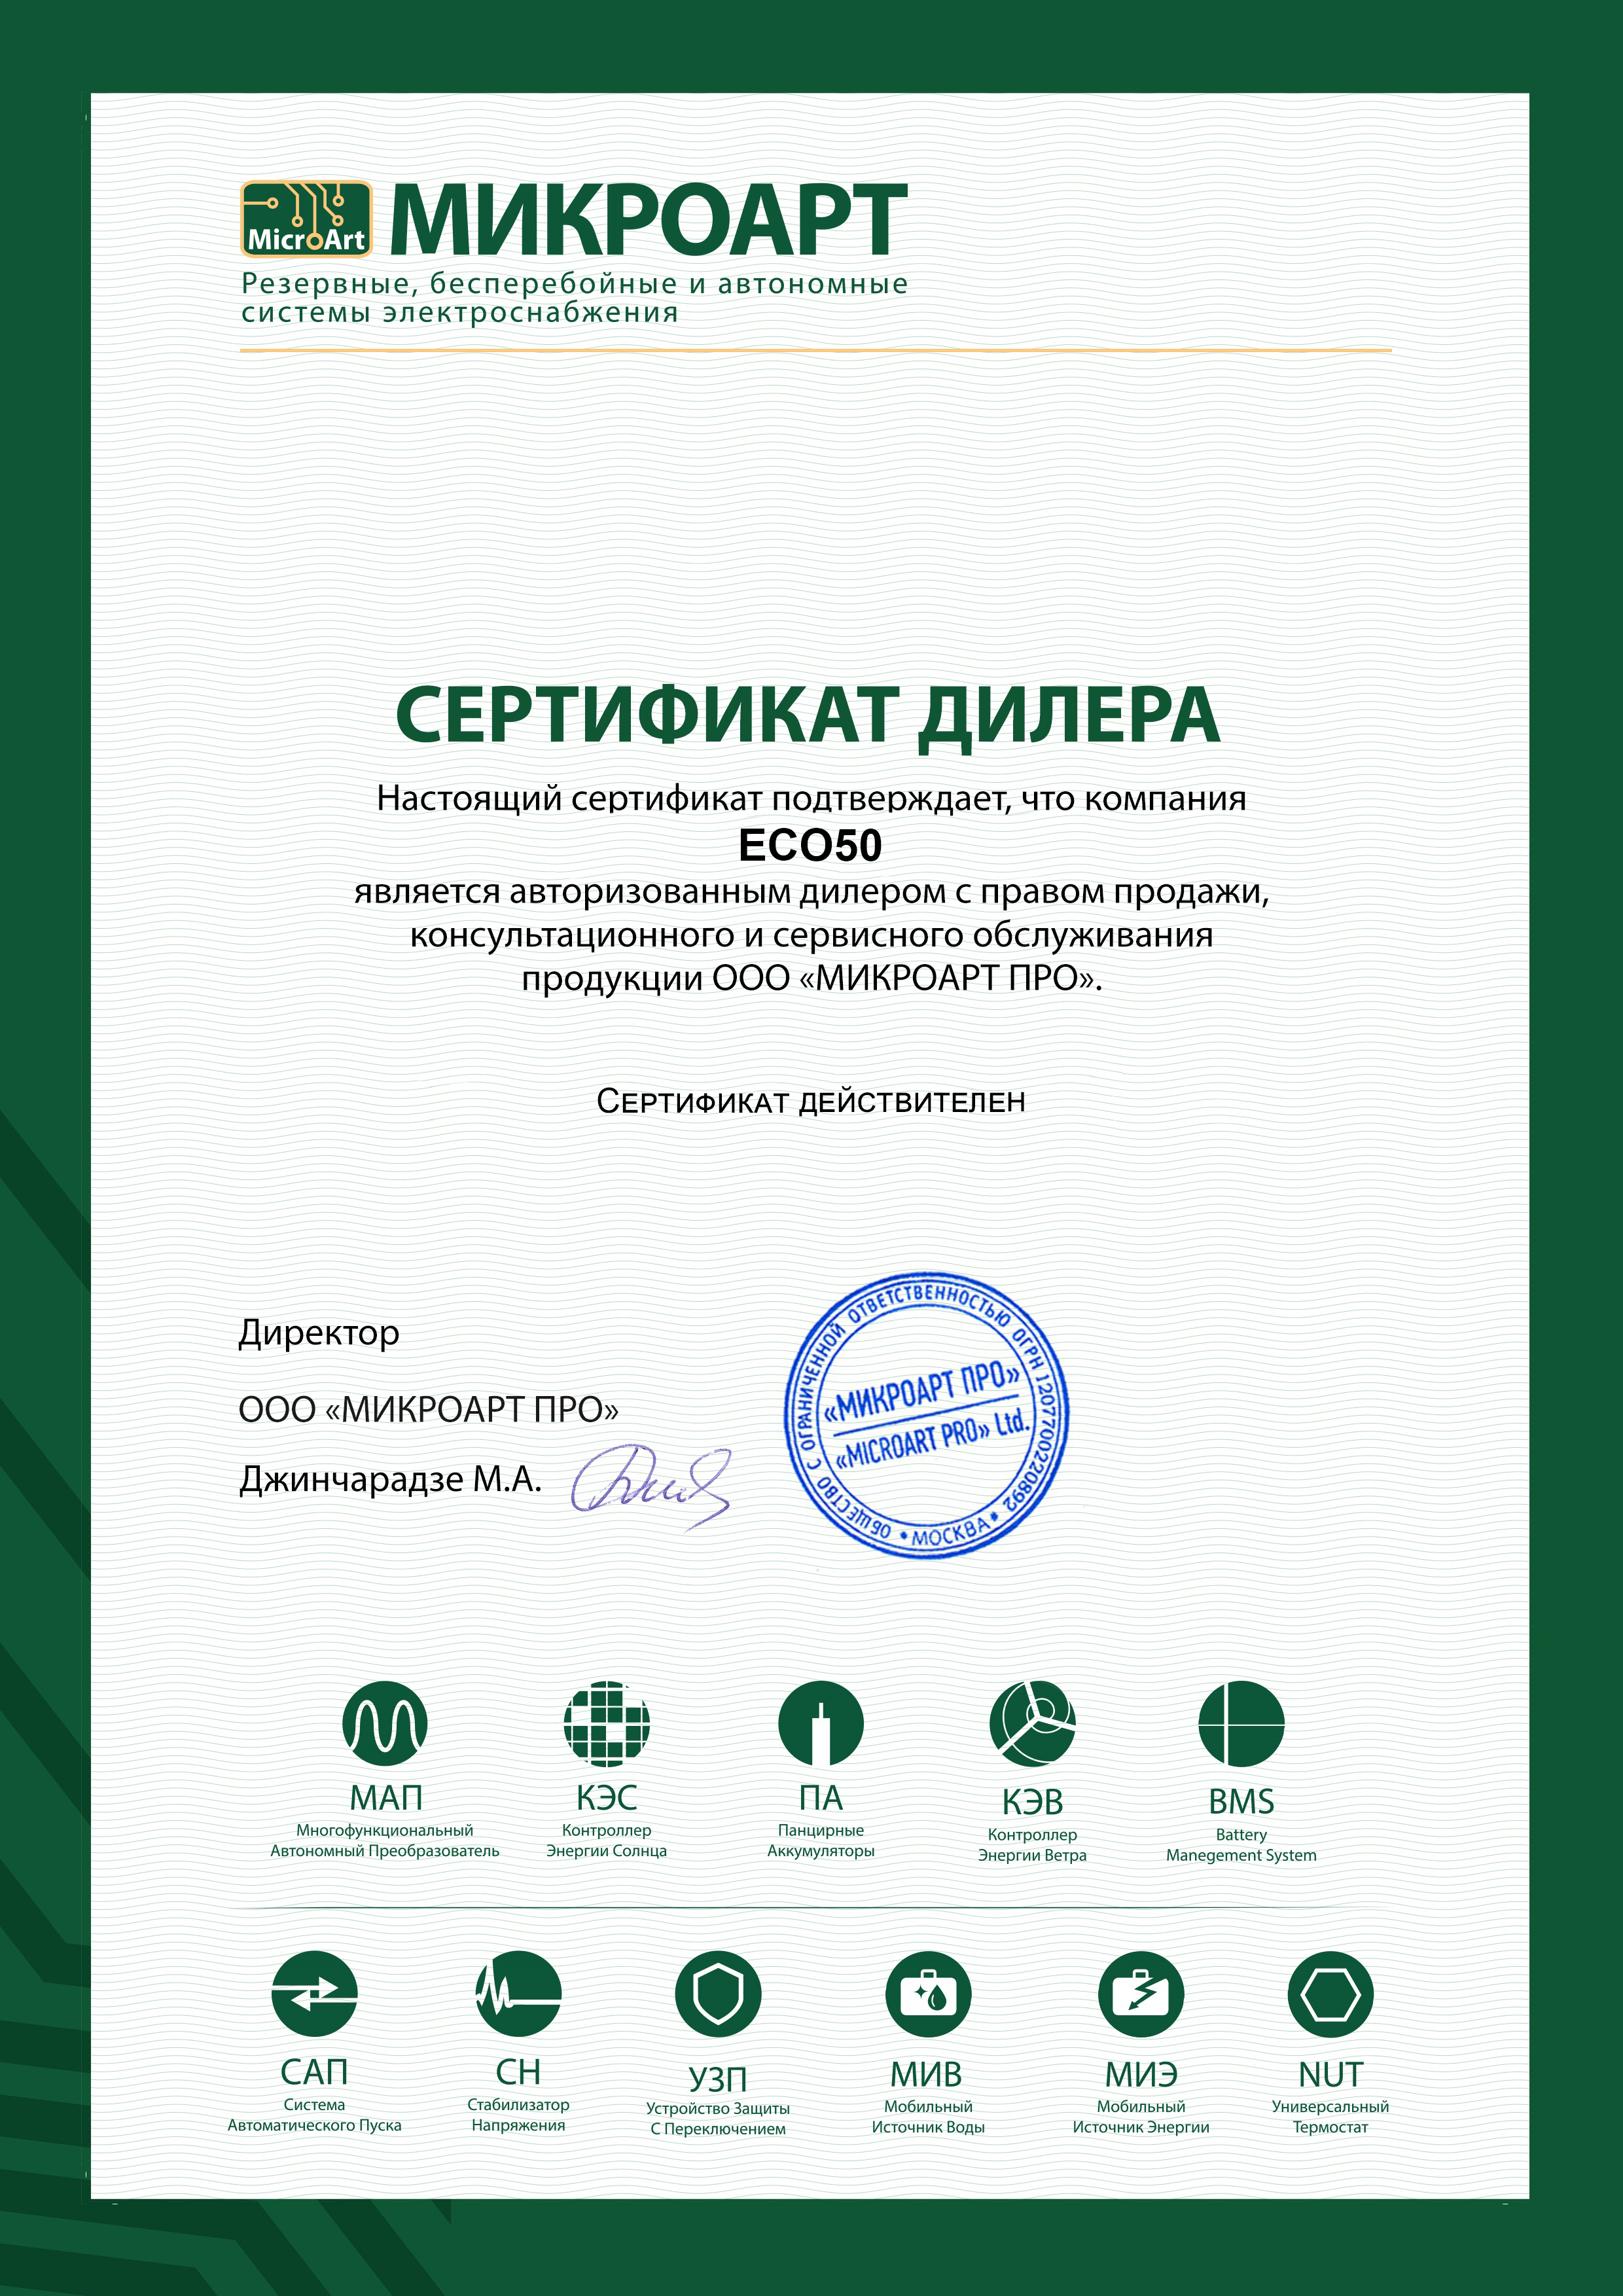 Сертификат дилера МАП SIN Энергия